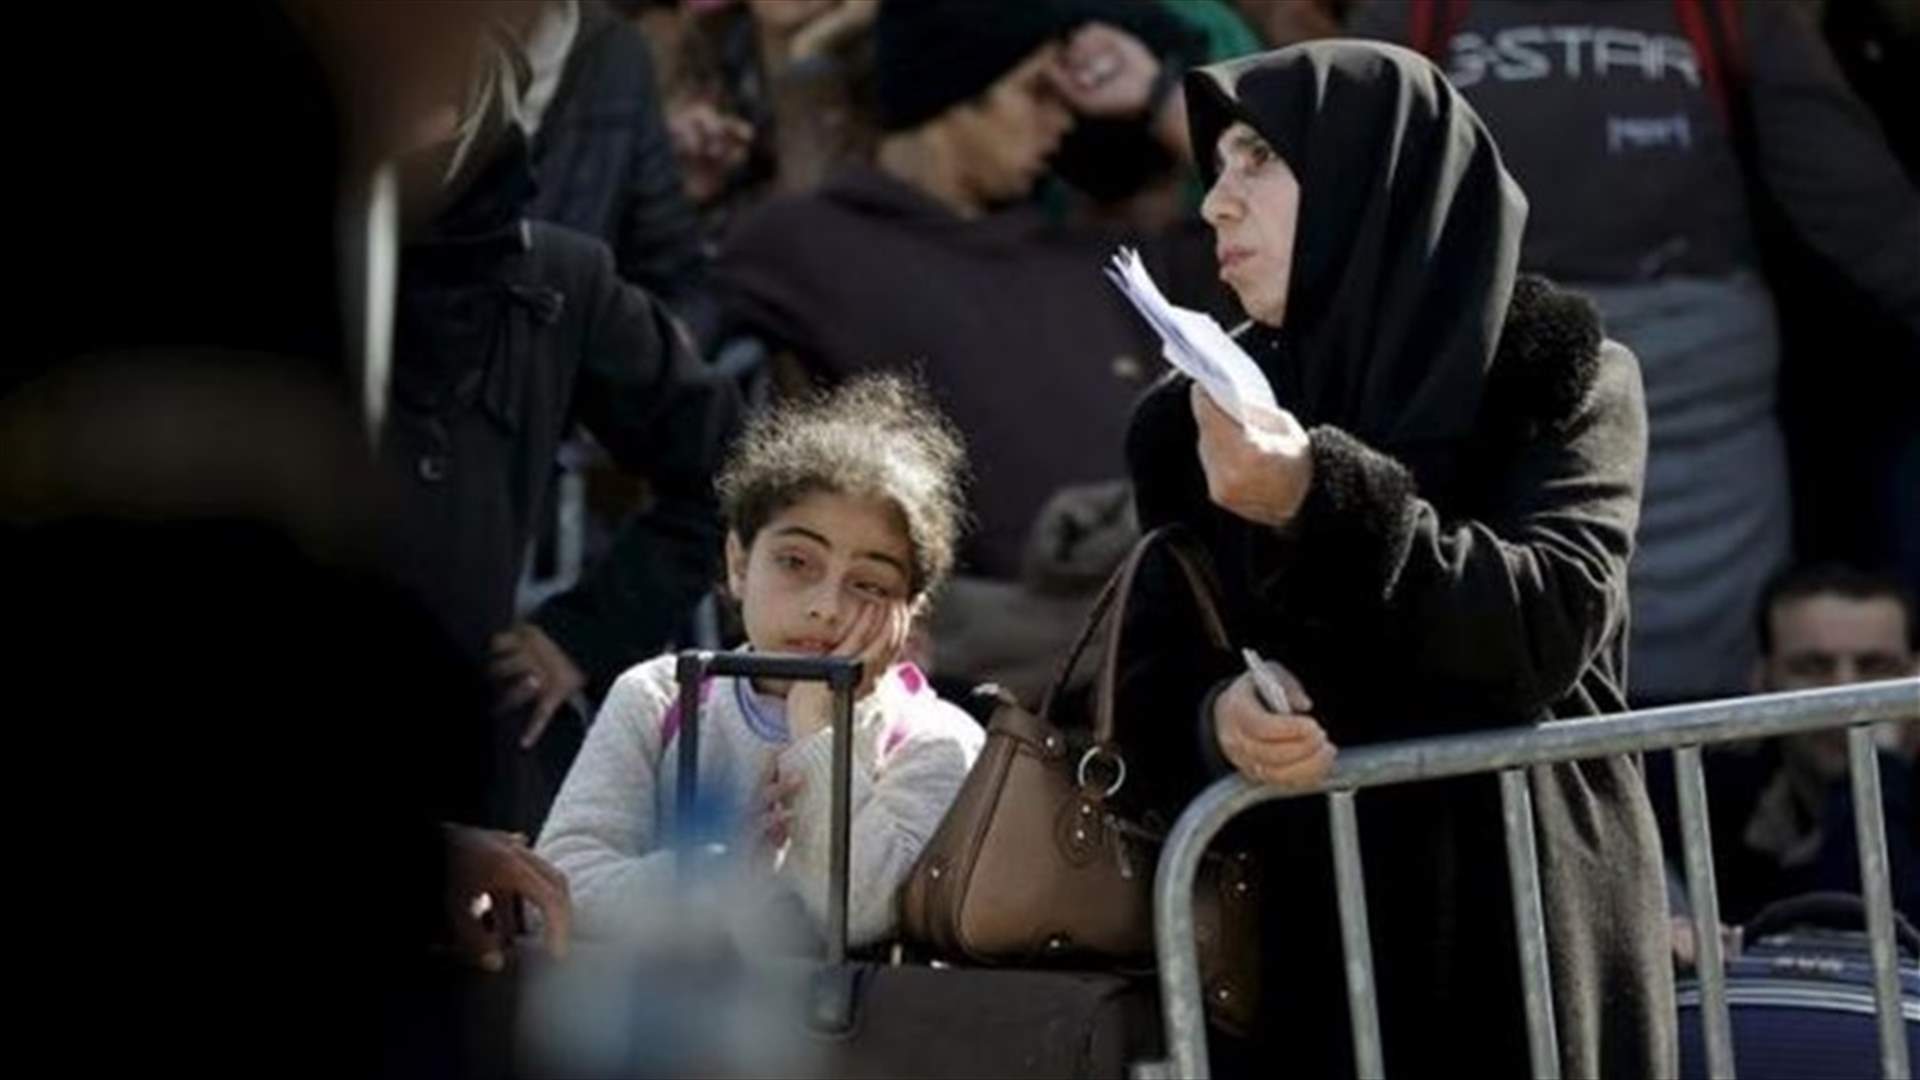 Middle East refugees help Europe prosecute war crimes